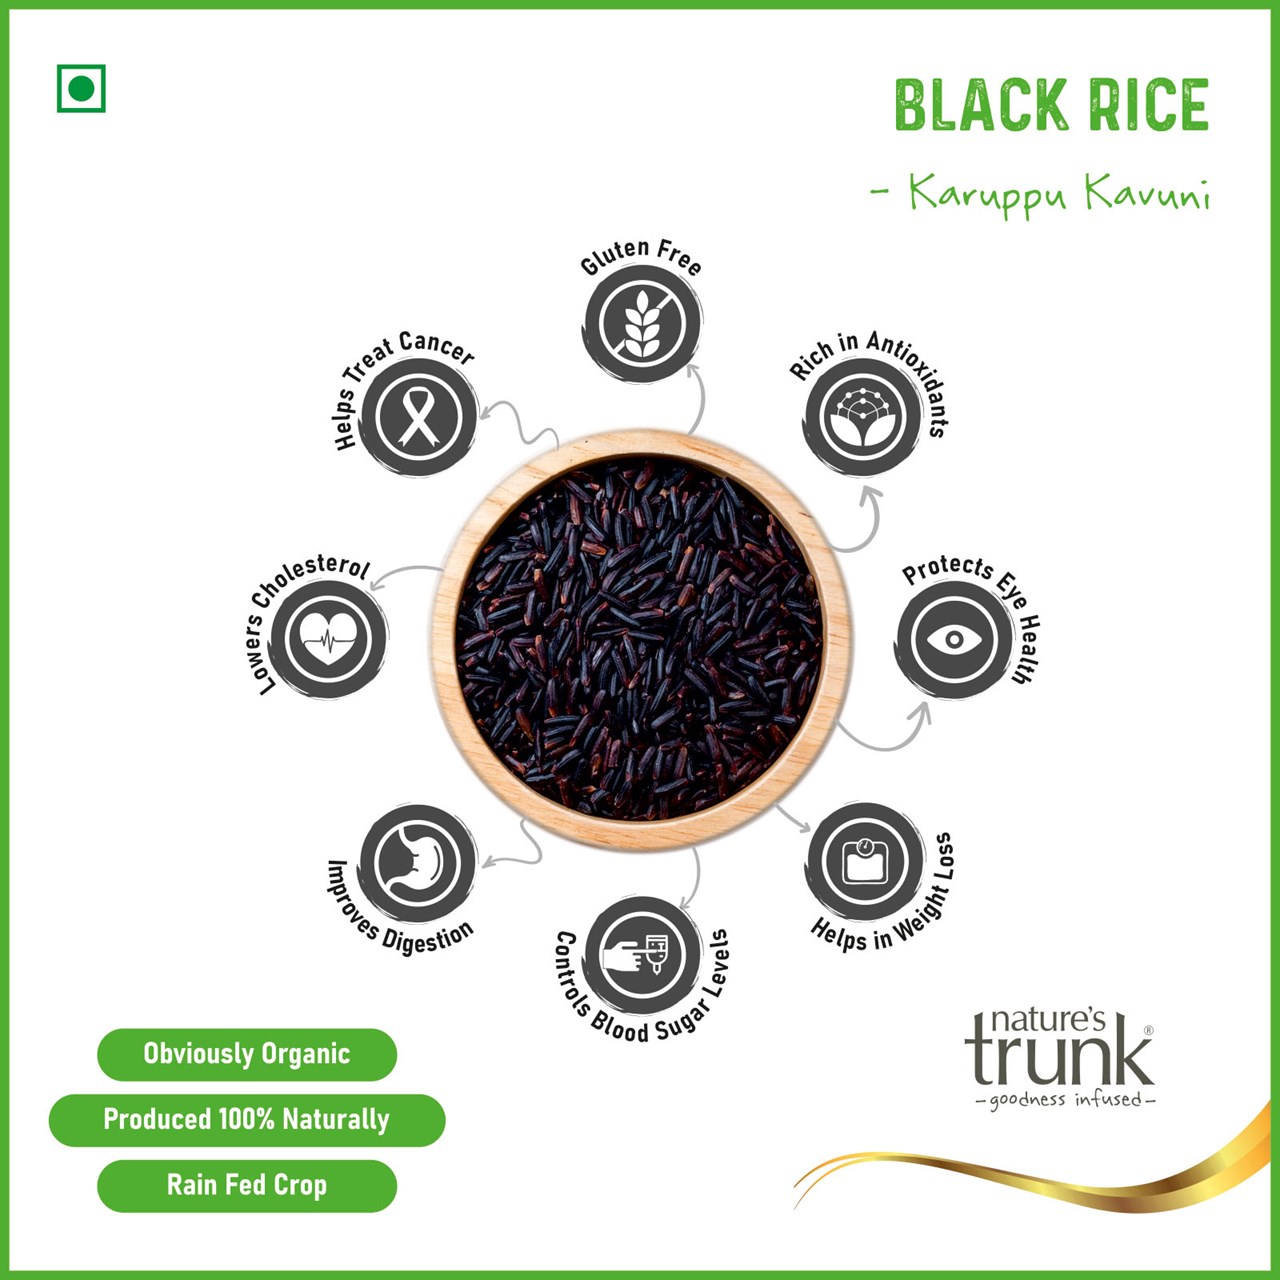 Picture of Black Rice Flakes ( Karuppu Kavuni Rice ) 600g